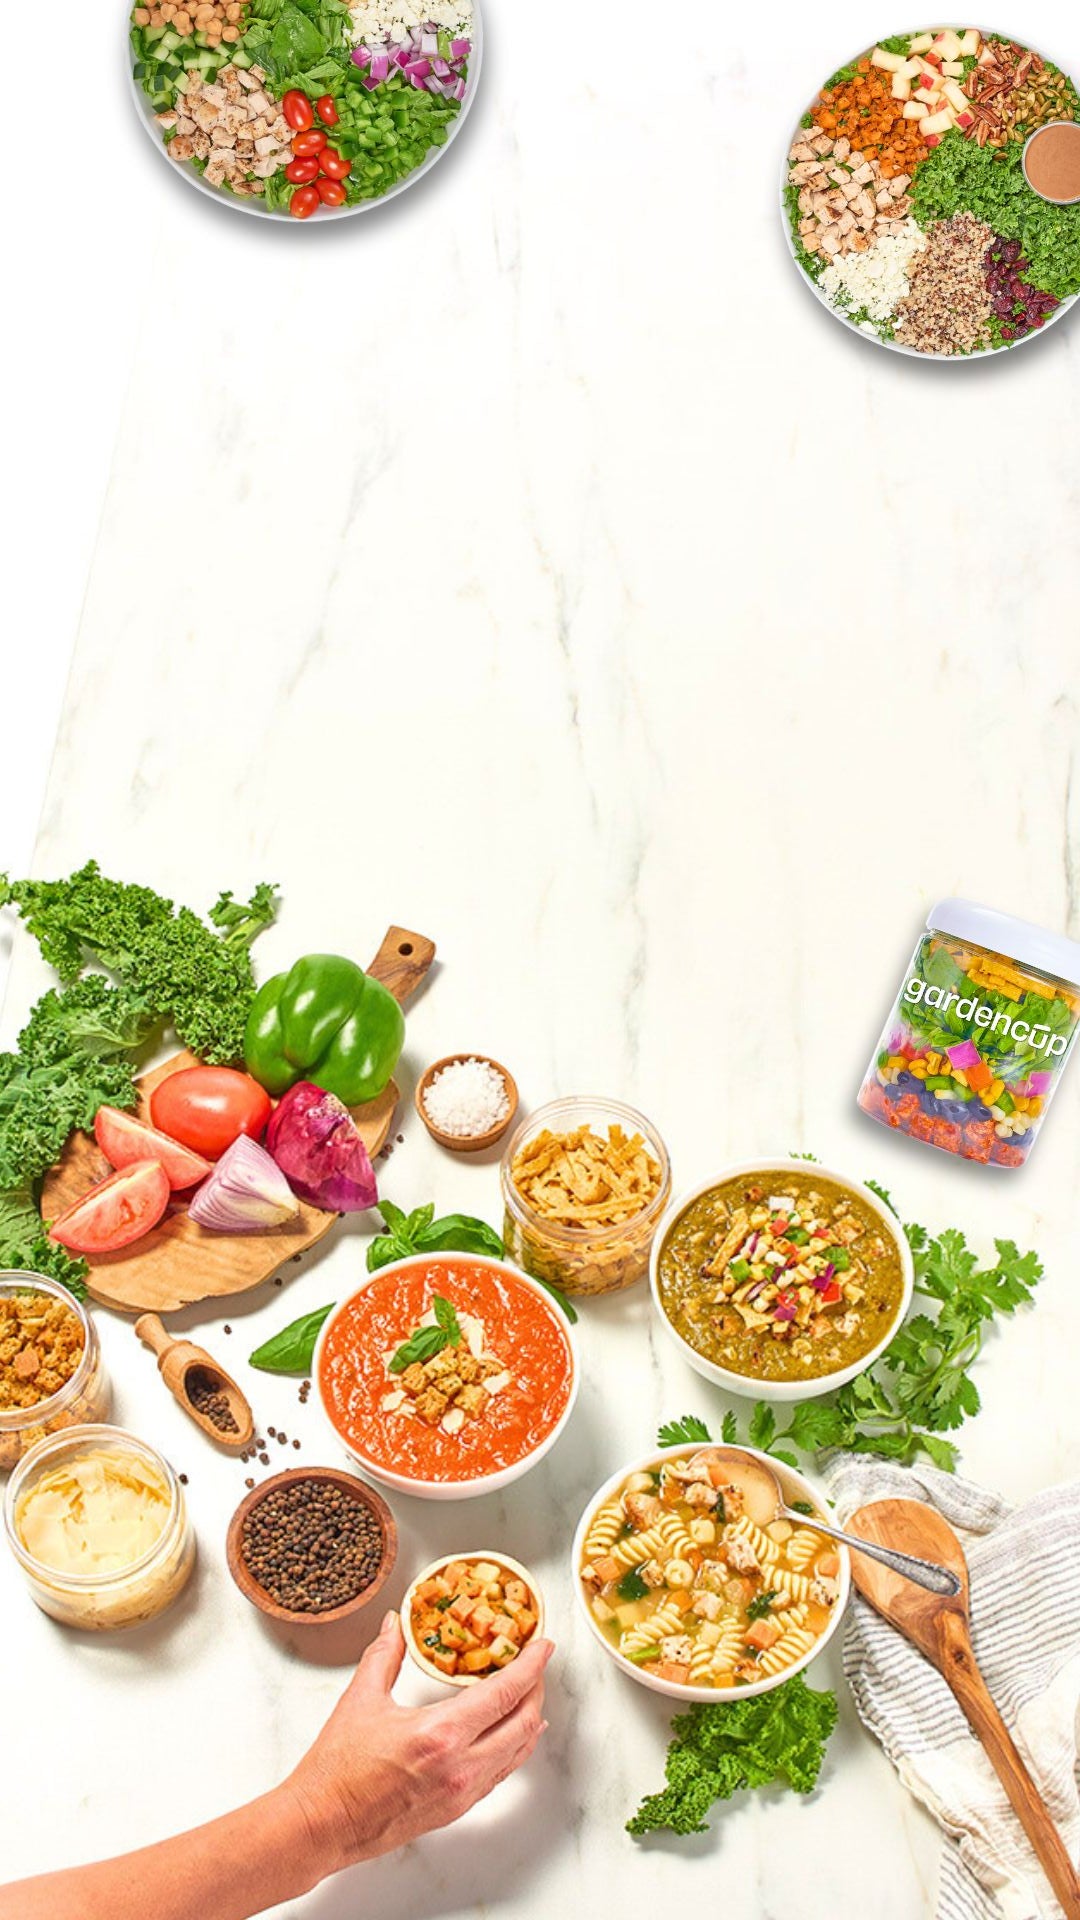 American Dream Salad Box In Pune, Organic Salad Box, Fresh & Healthy Salad  Boxes